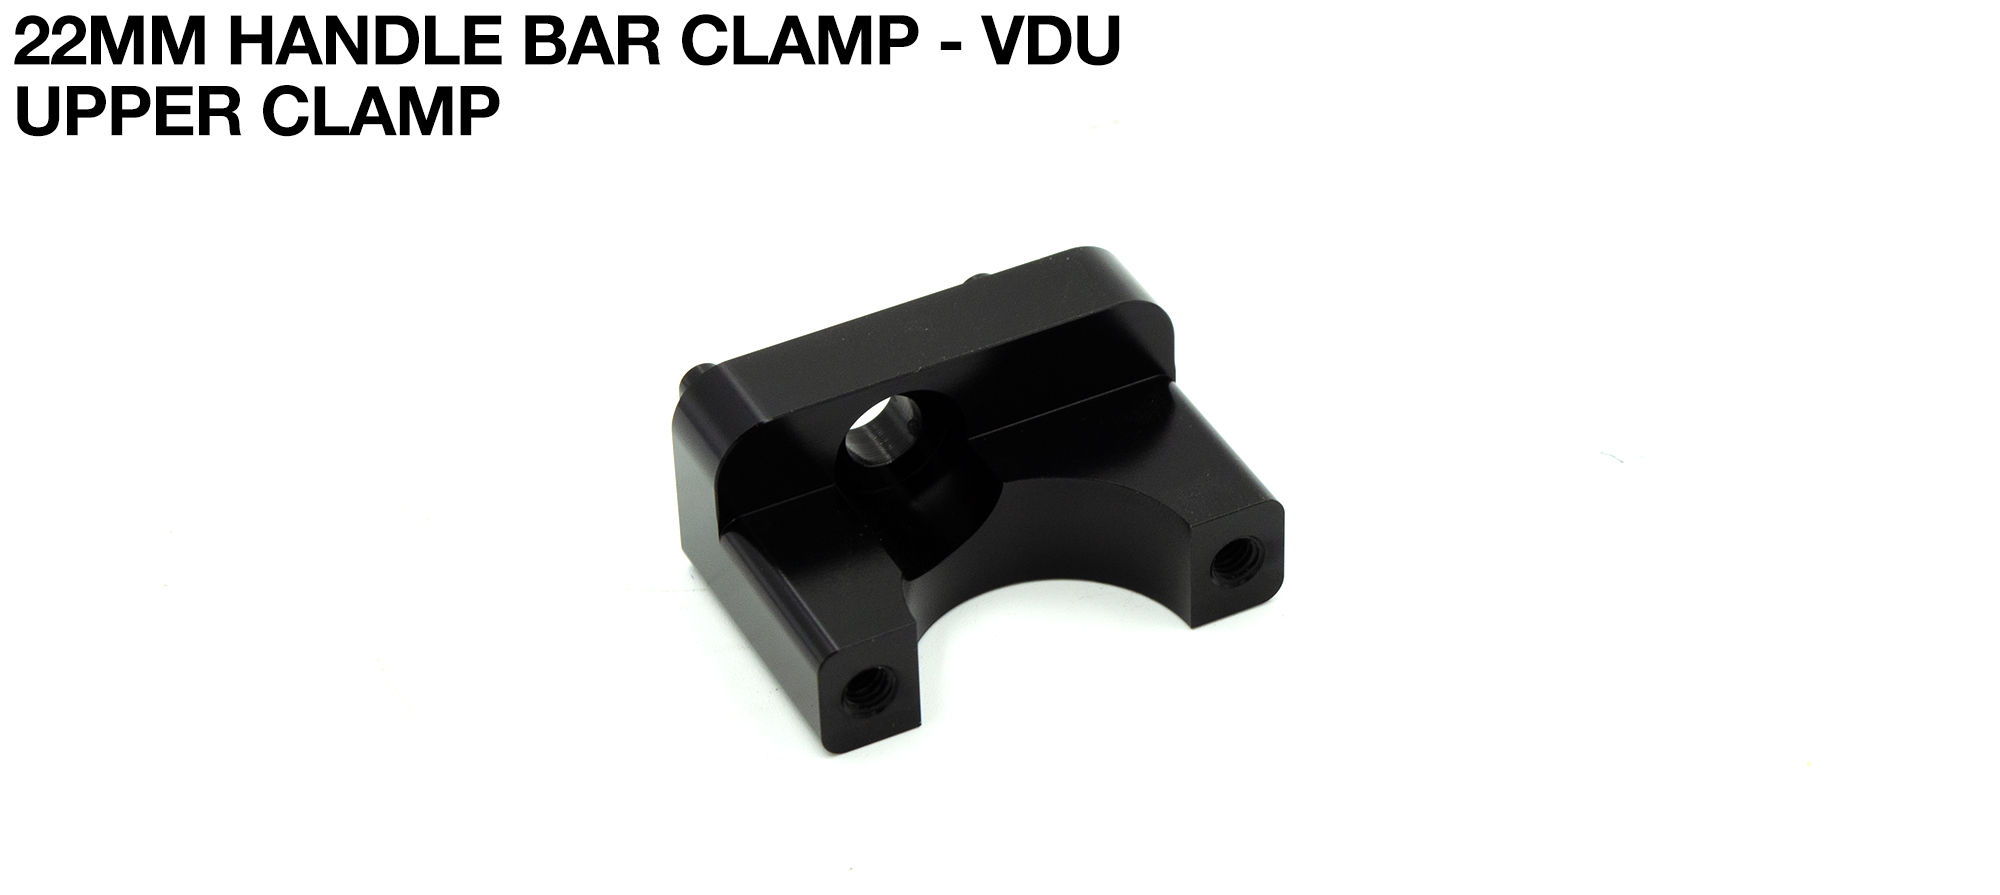 VESC DISPLAY UNIT - Upper Clamp for 22mm Handle Bars